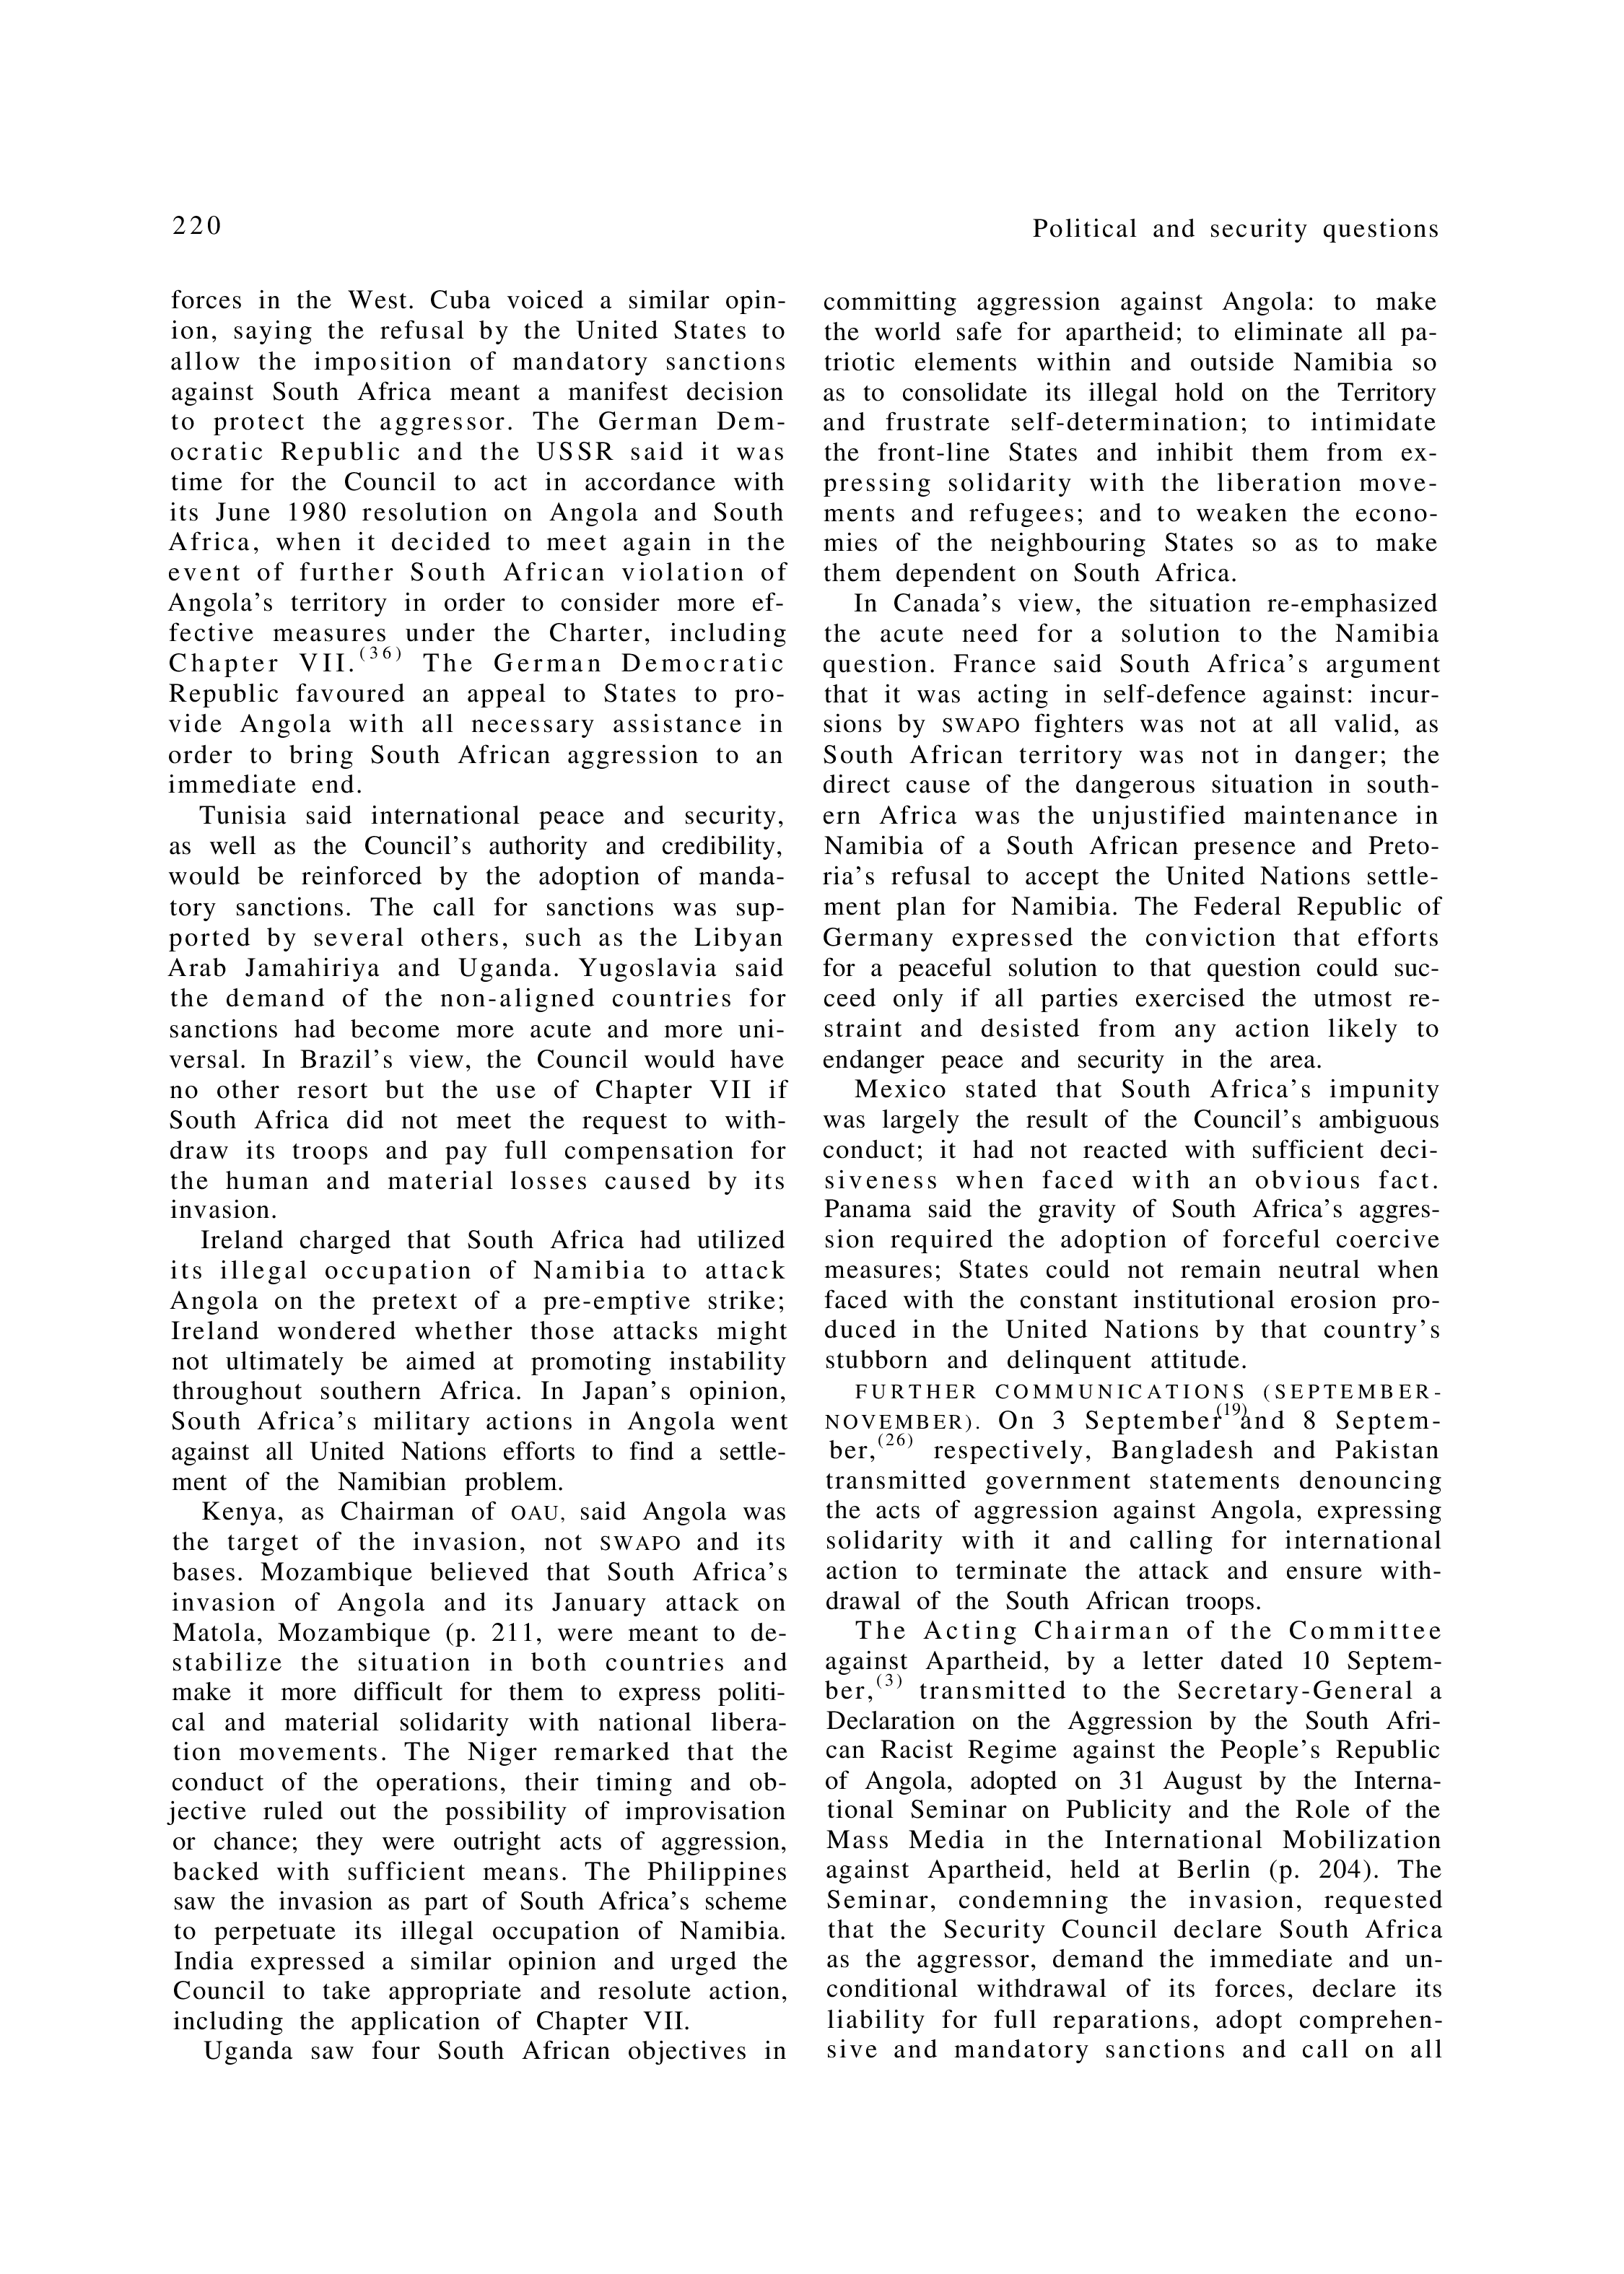 YUN Volume_Page 1981_232